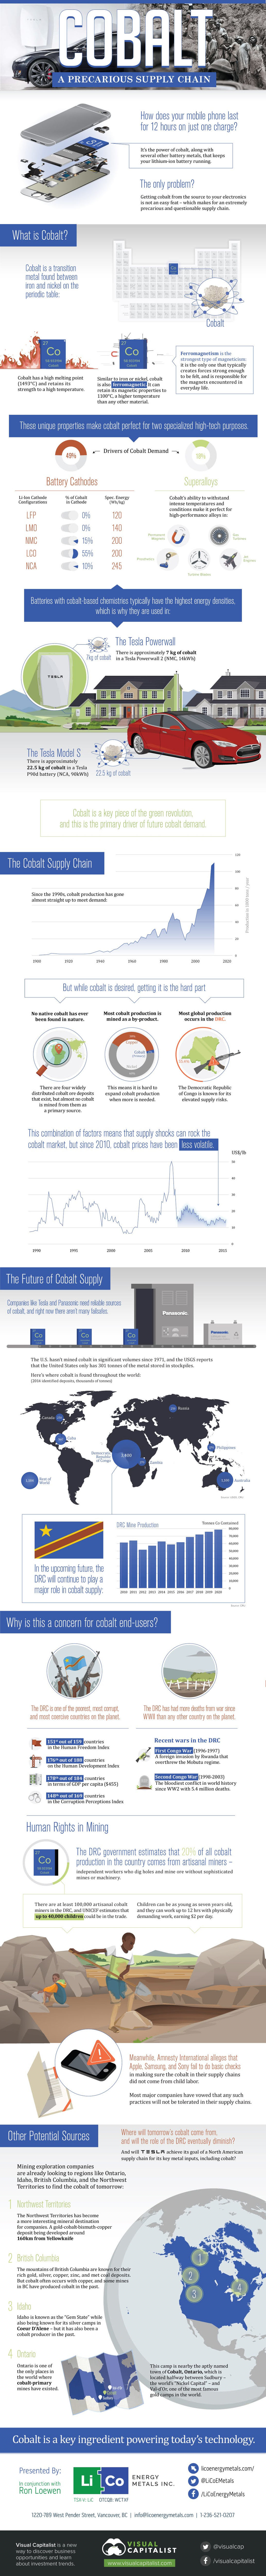 Cobalt: A Precarious Supply Chain #infographic